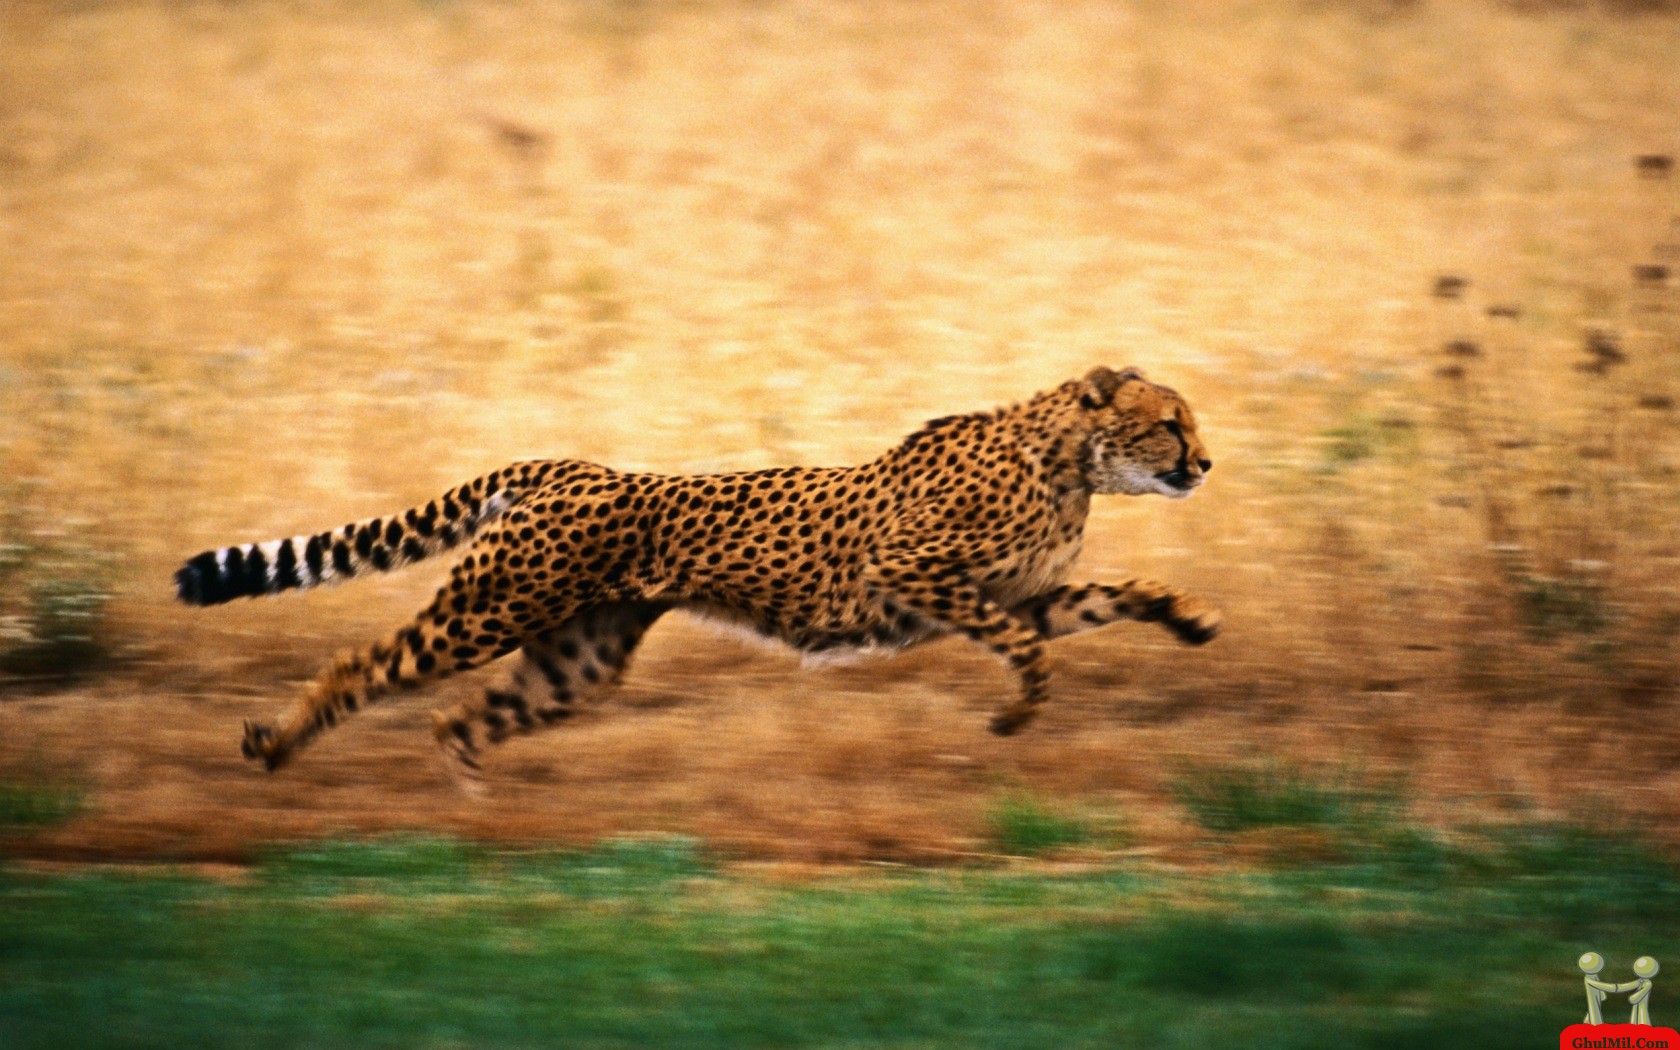 Cheetah Running Related Keywords amp Suggestions Cheetah Running